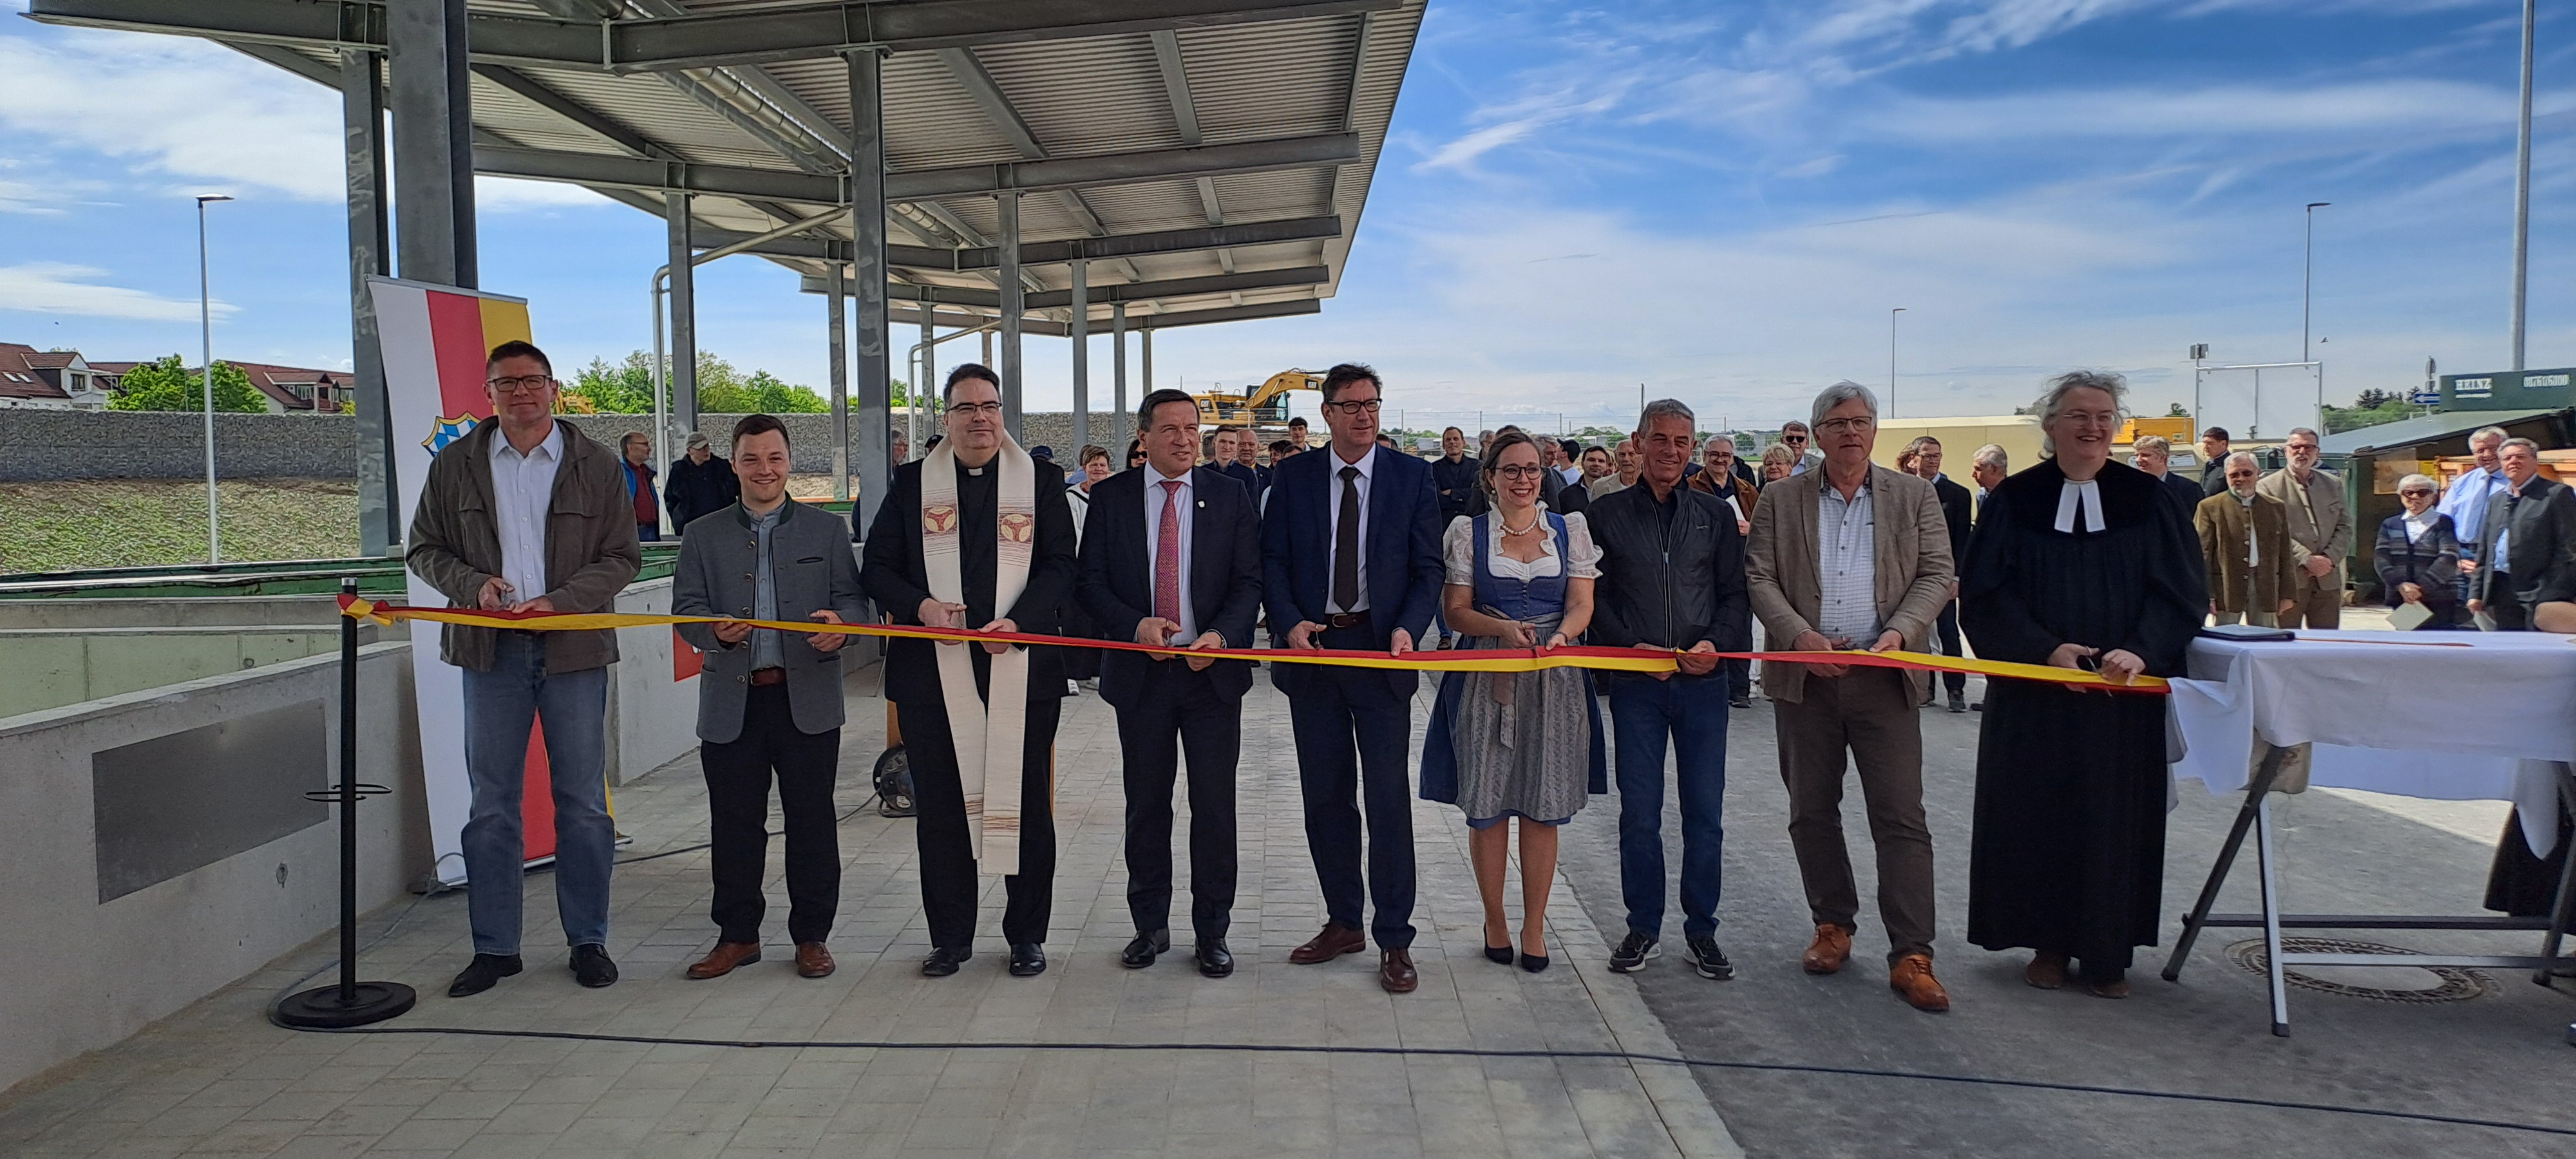 Neuer Recyclinghof in Erding eröffnet